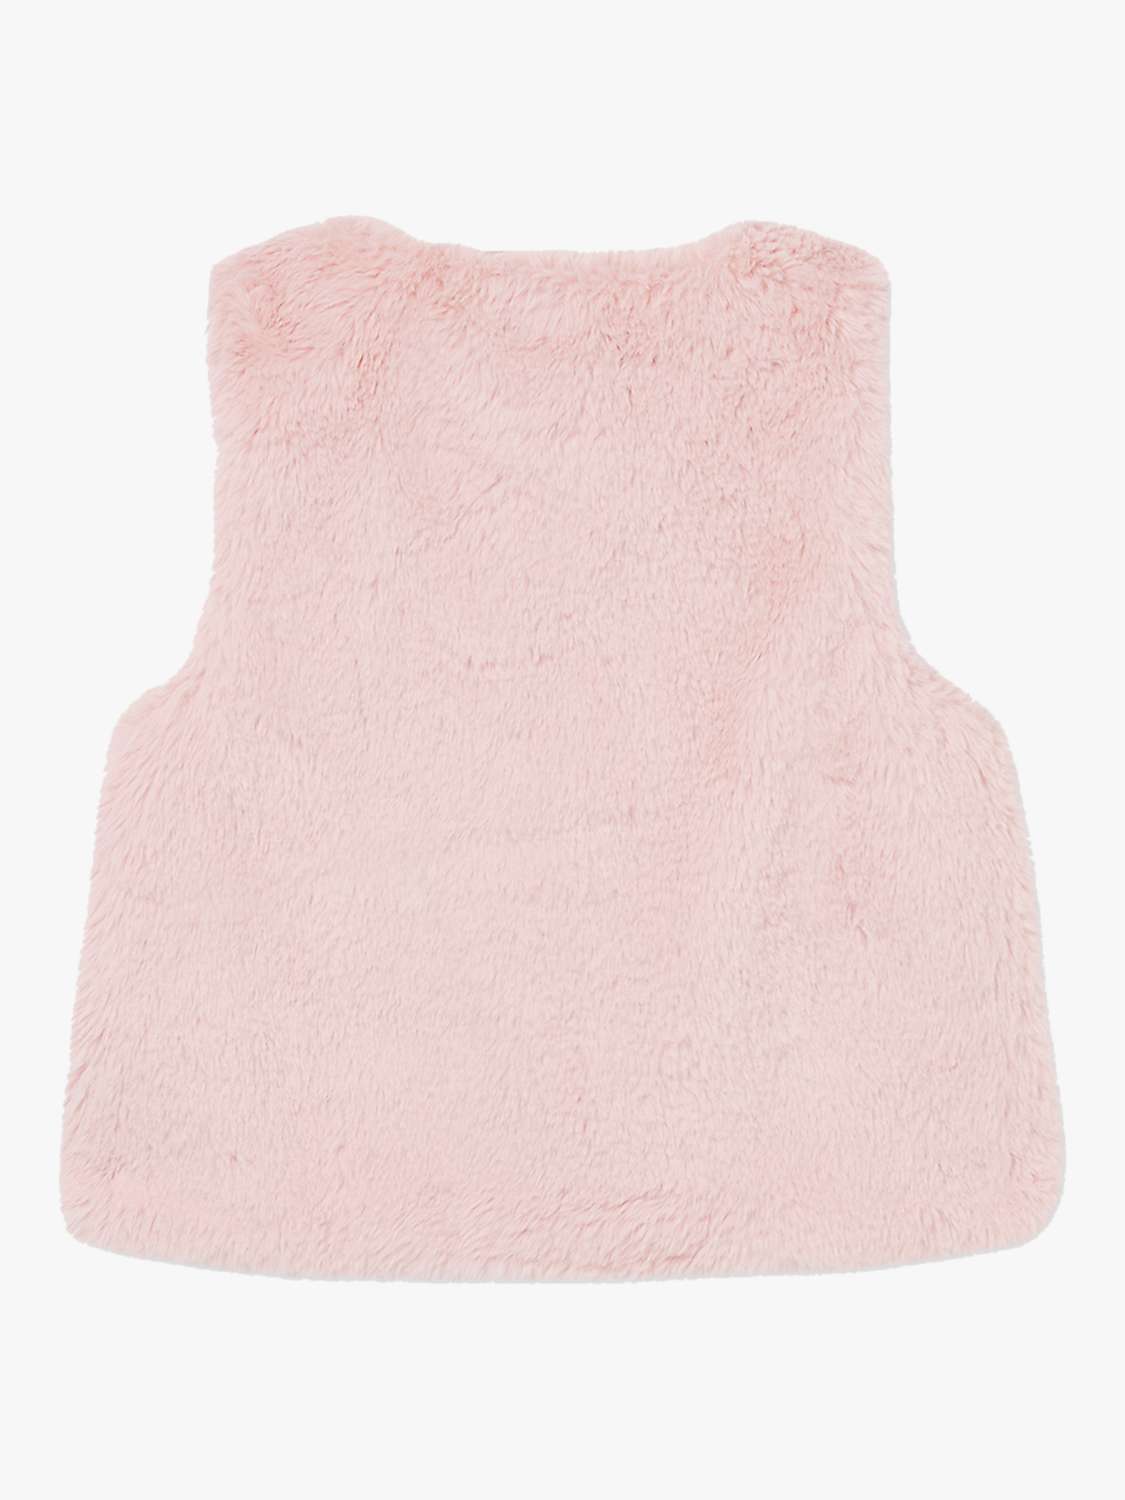 Buy Du Pareil au même Kids' Faux Fur Sleeveless Cardigan, Pink Online at johnlewis.com